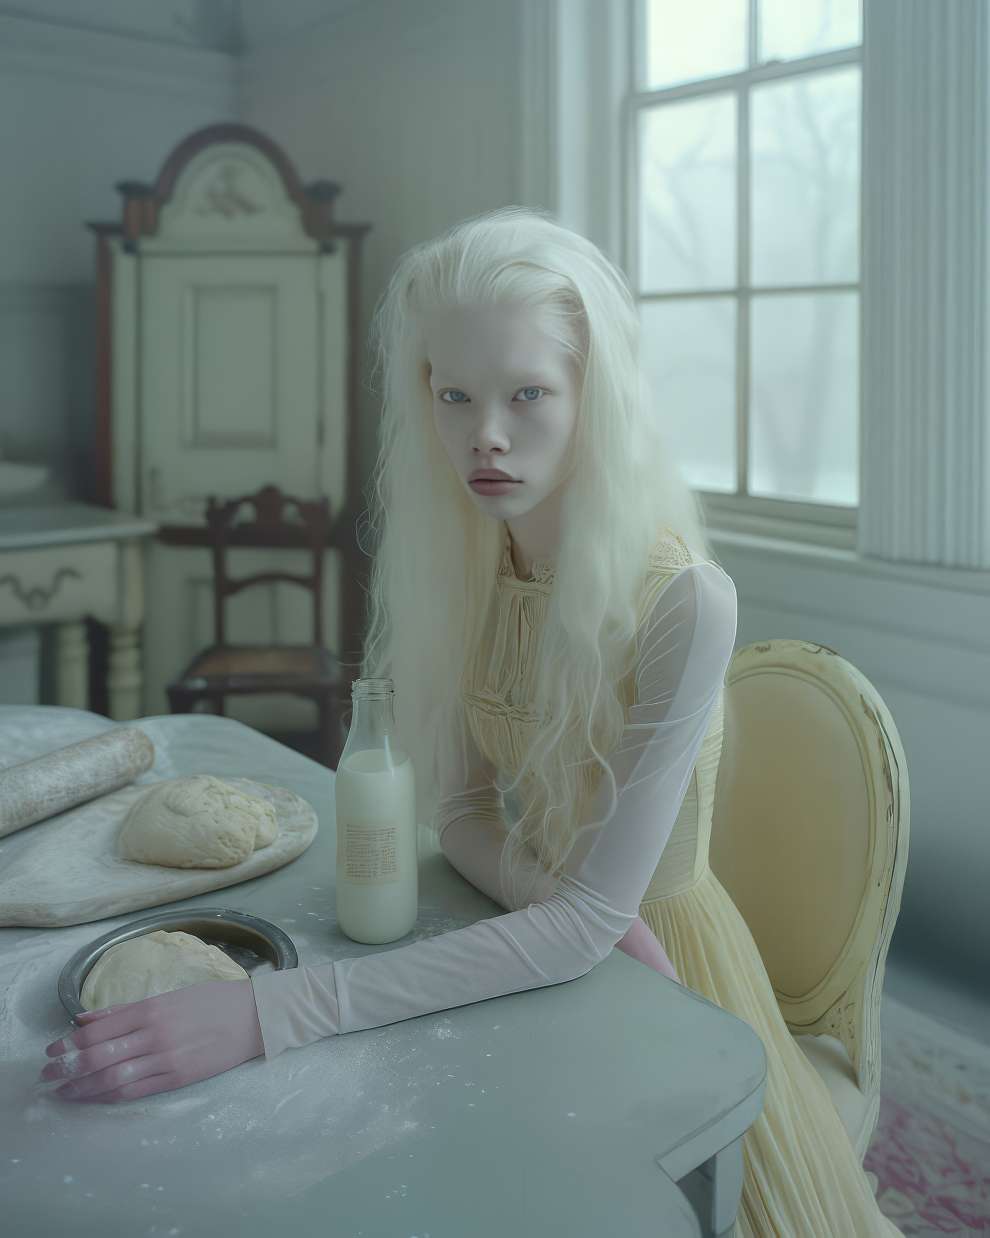 Milky78 34 View Portrait Of An Asian Albino Woman Drinking Milk A4b8dd0f 77eb 4baf 913b 6204773f60f4 661a96e7d2159 700 